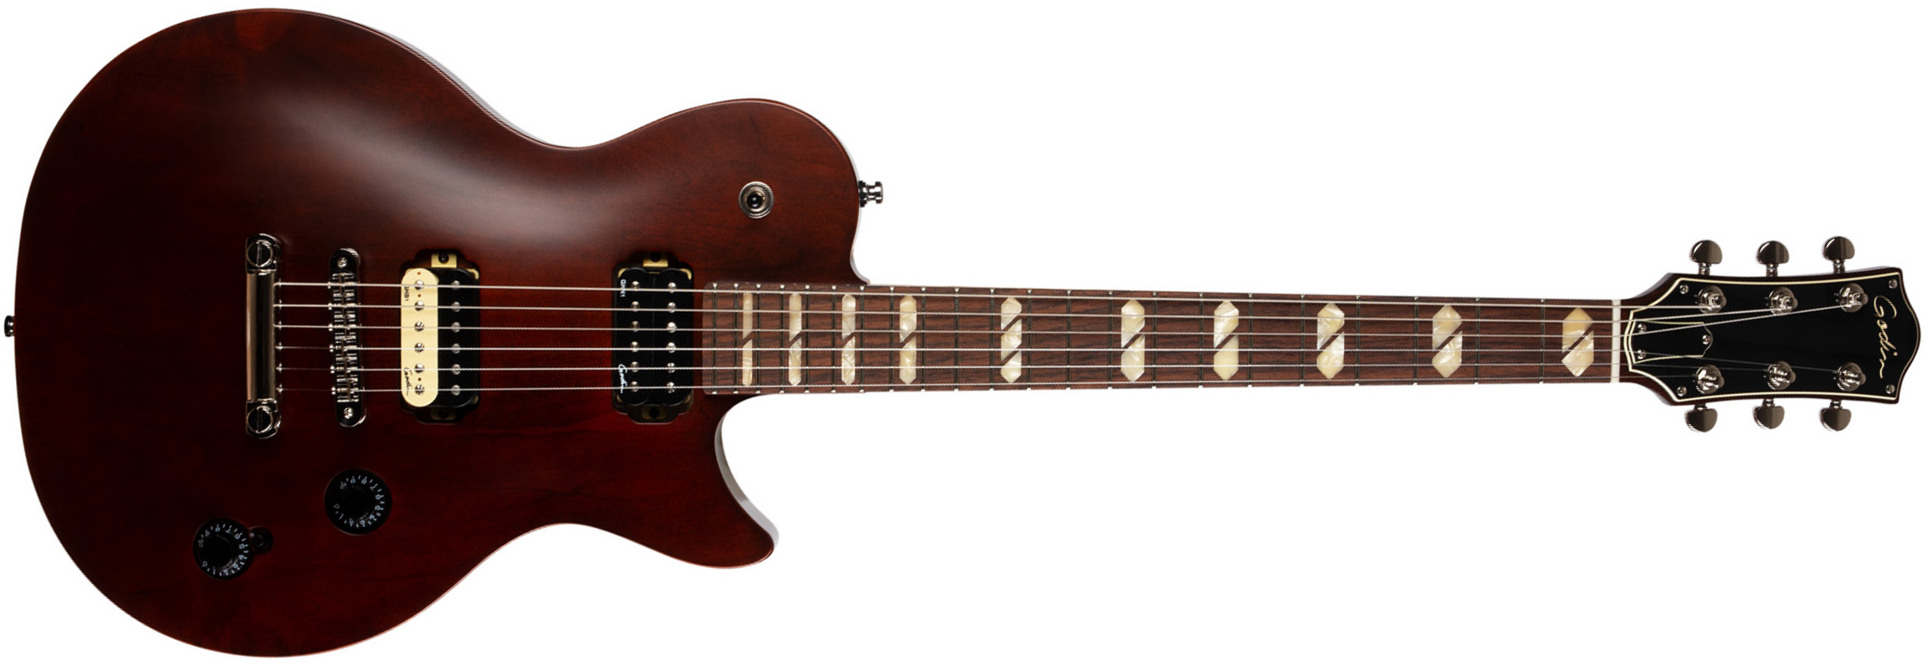 Godin Summit Classic Hh Ht Rw - Havana Brown - Single cut electric guitar - Main picture